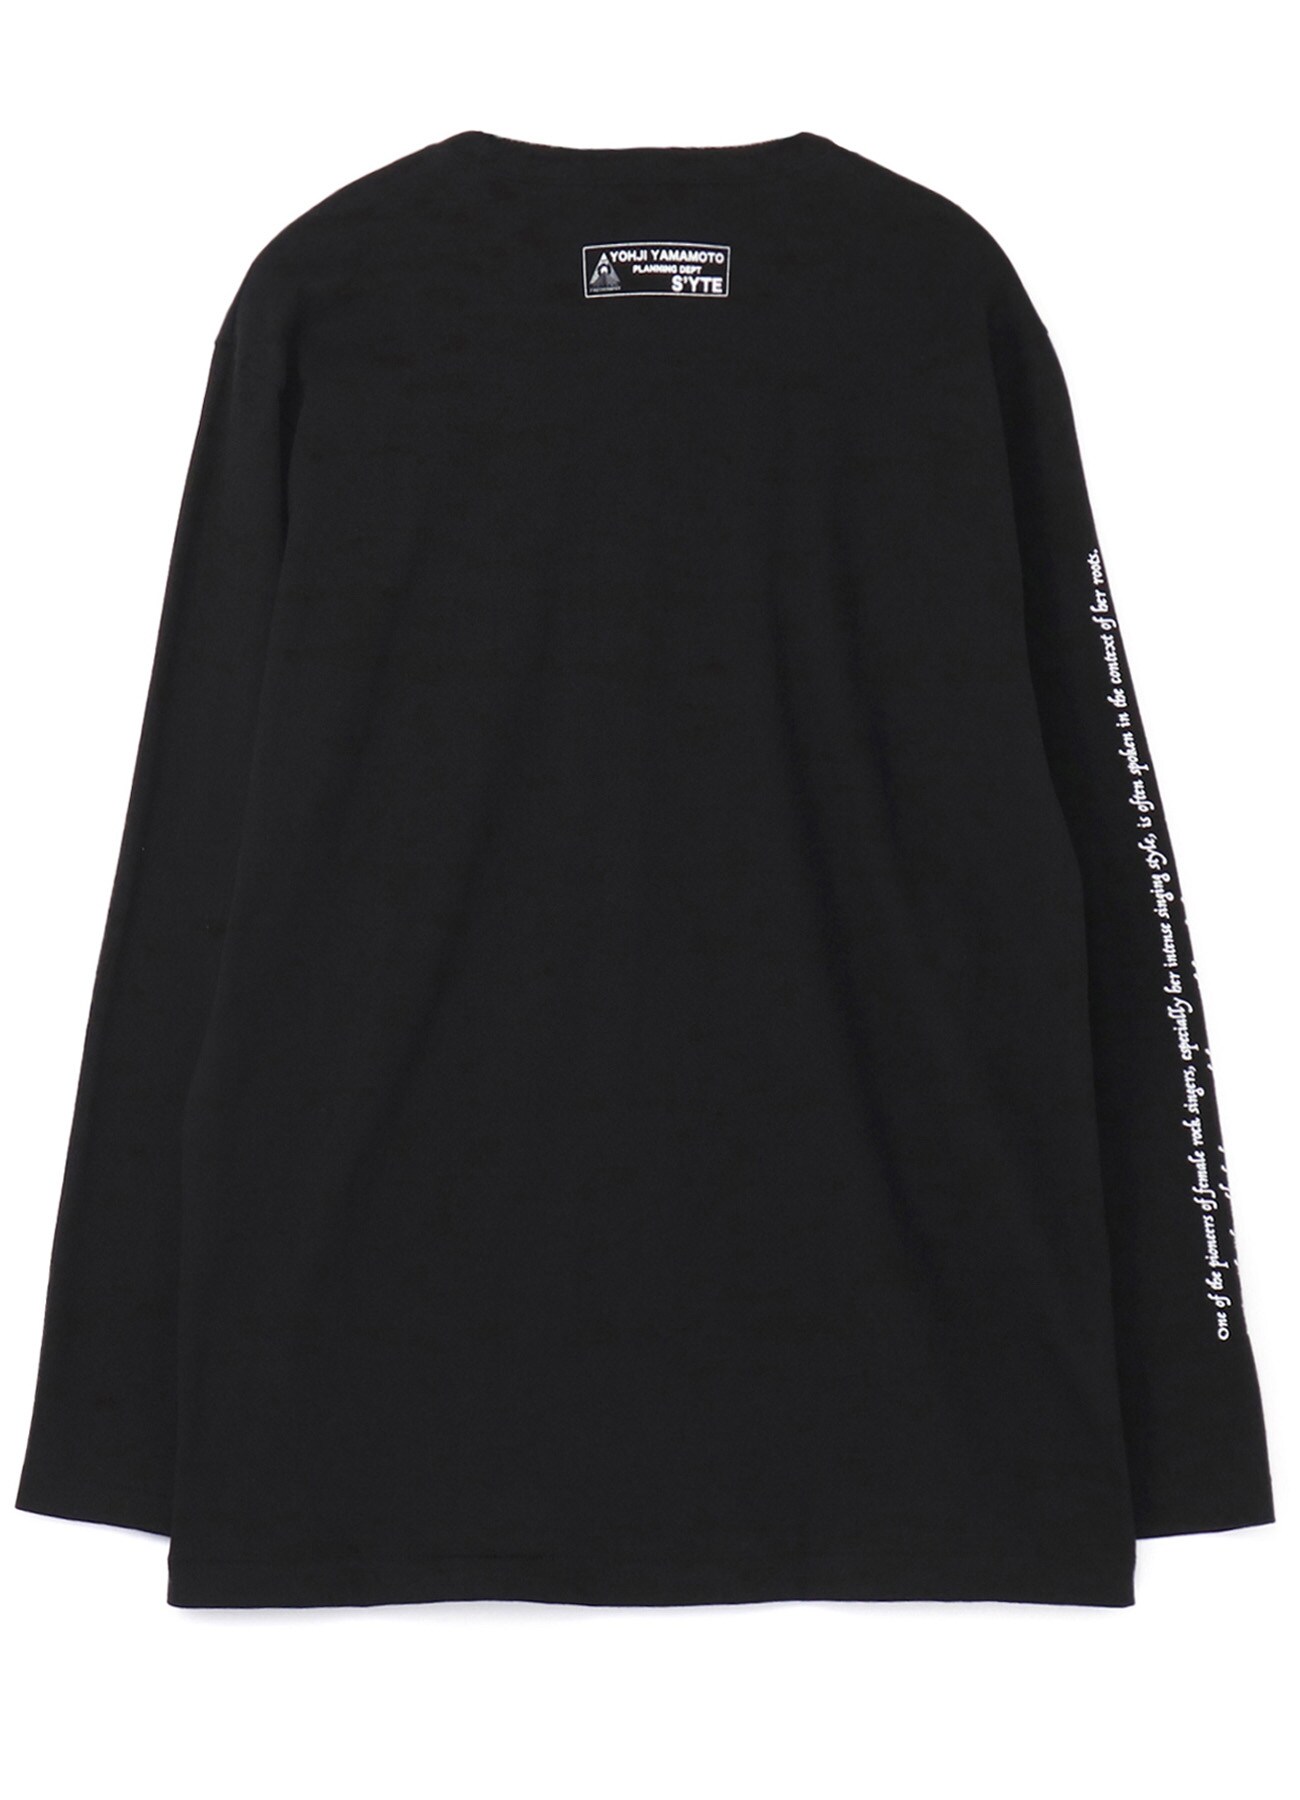 S'YTE × Dick Barnatt / Patti Smith Long Sleeve T-shirt